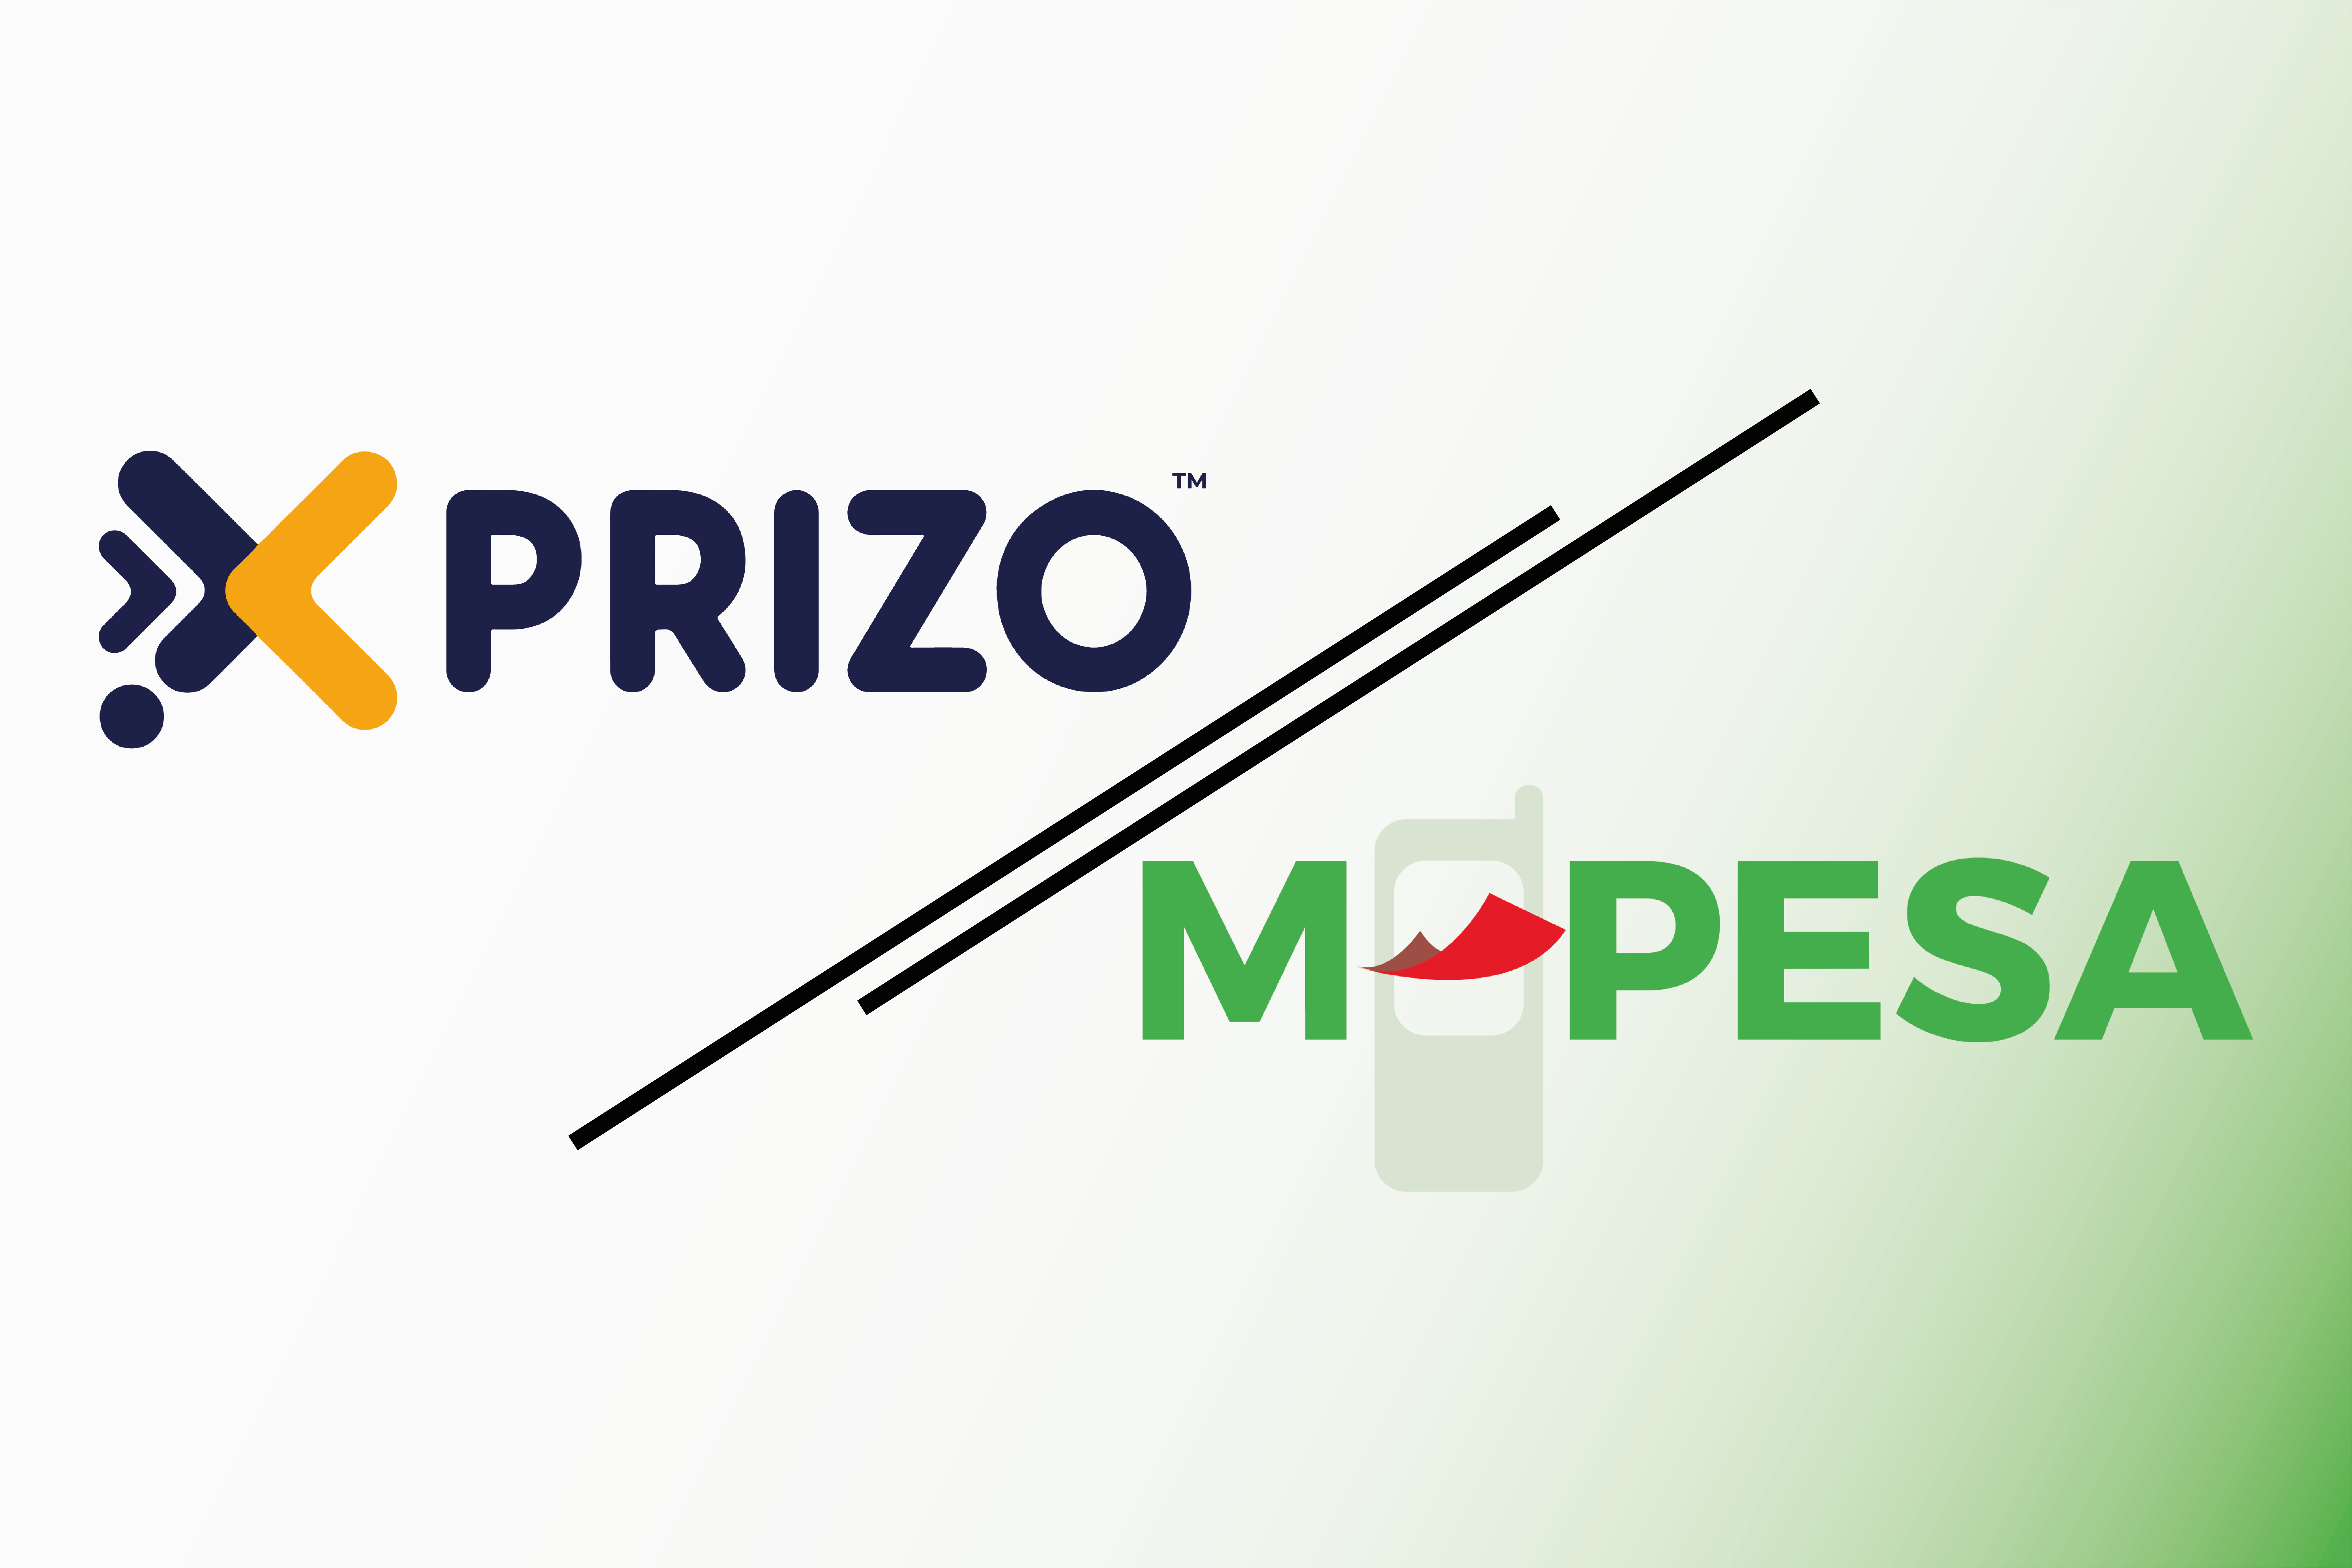 Xprizo announces groundbreaking integration with M-PESA